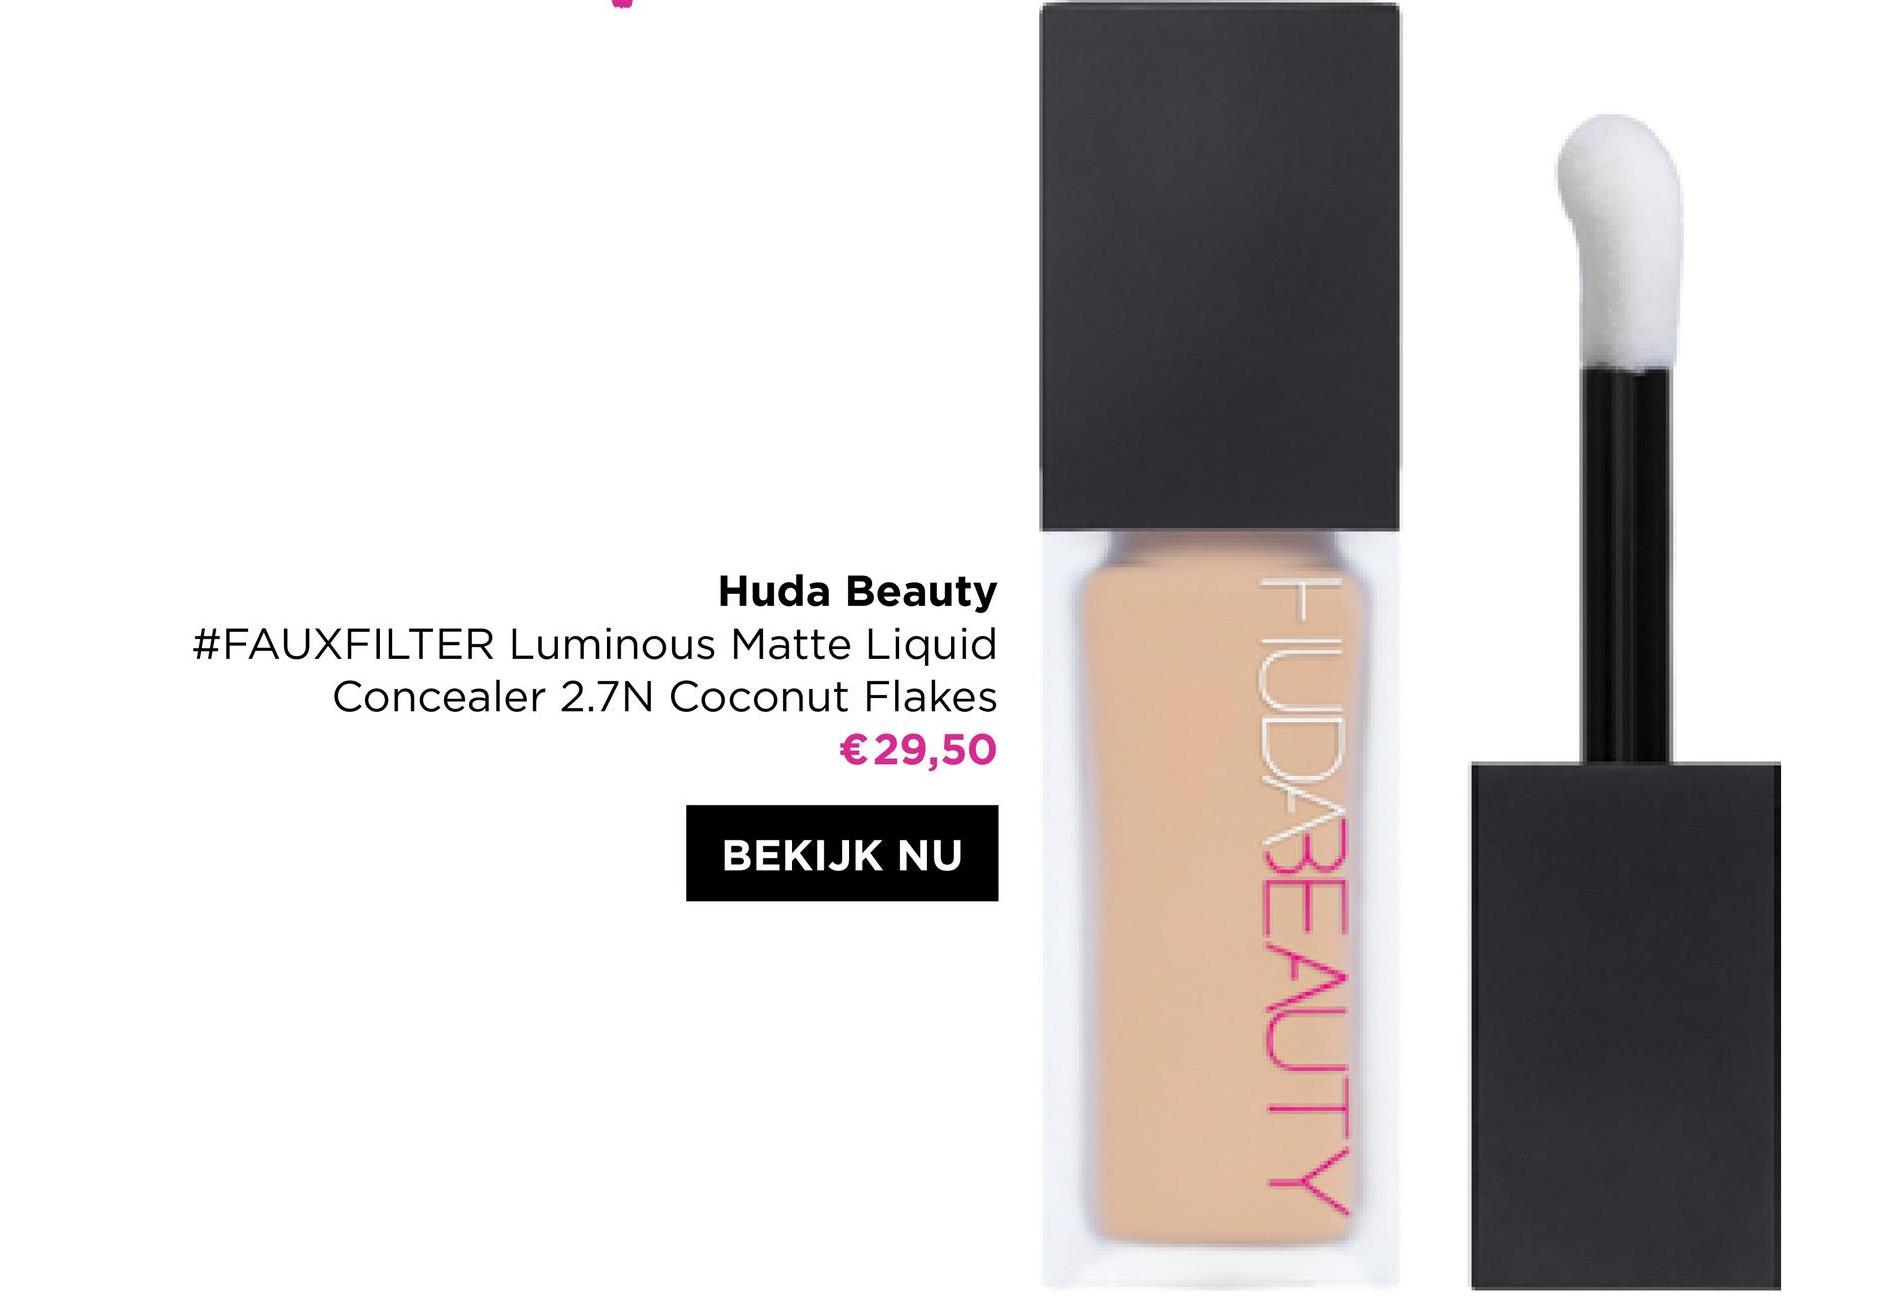 Huda Beauty
#FAUXFILTER Luminous Matte Liquid
Concealer 2.7N Coconut Flakes
€29,50
BEKIJK NU
HUDABEAUTY